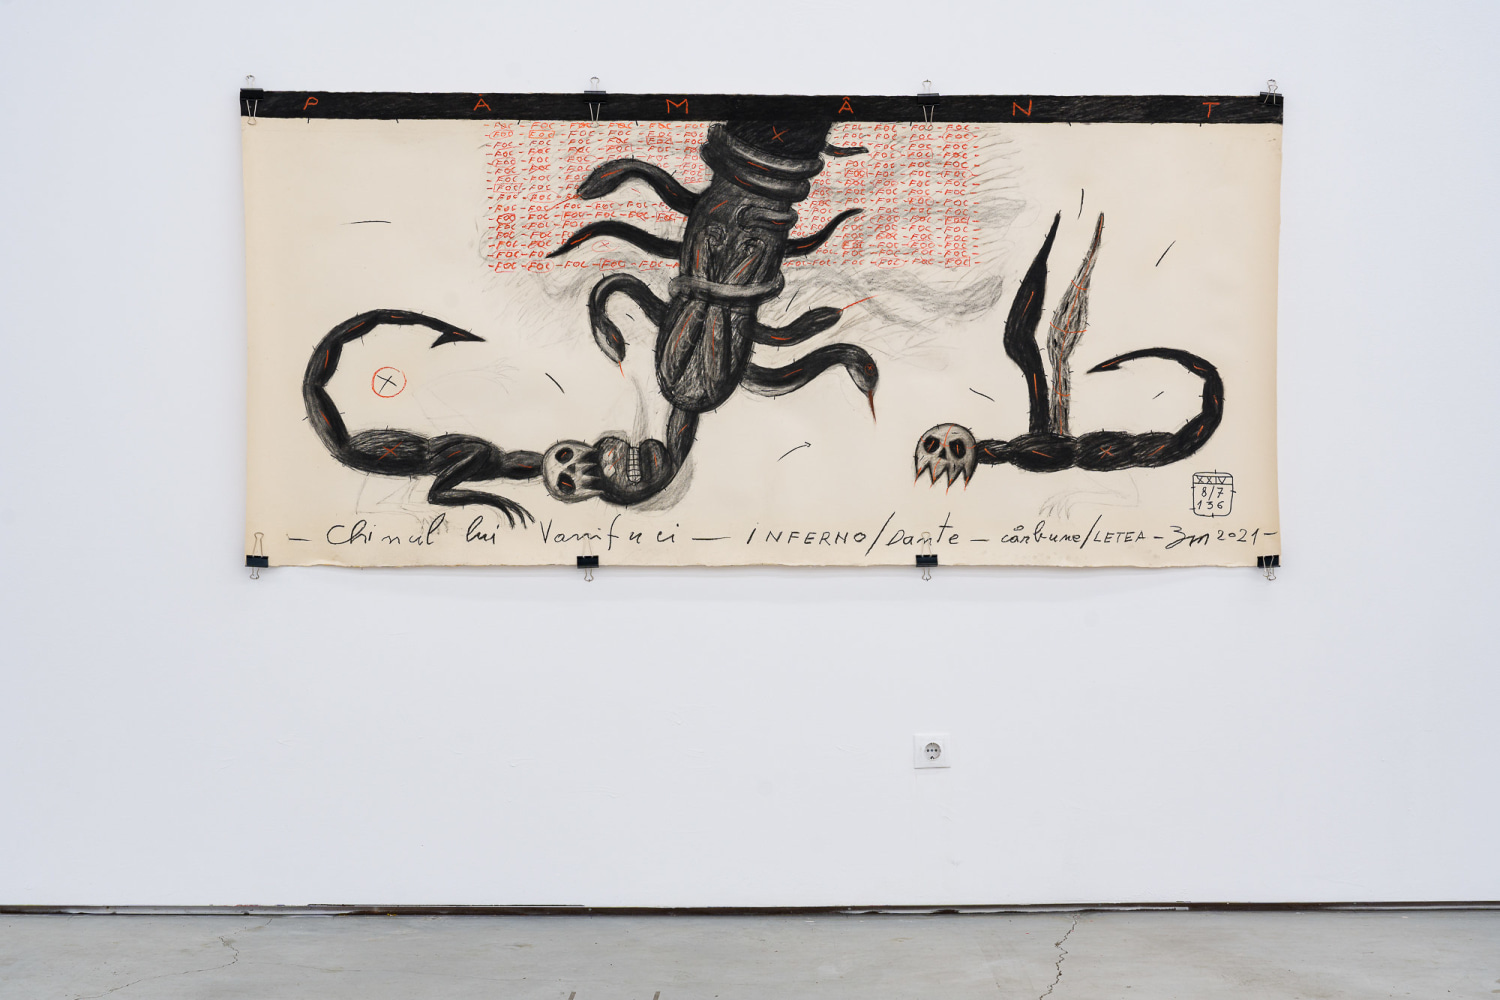 Marian Zidaru &amp;nbsp;
The torment of Vanifuci, 2021
Charcoal on paper
240x105 cm&amp;nbsp;